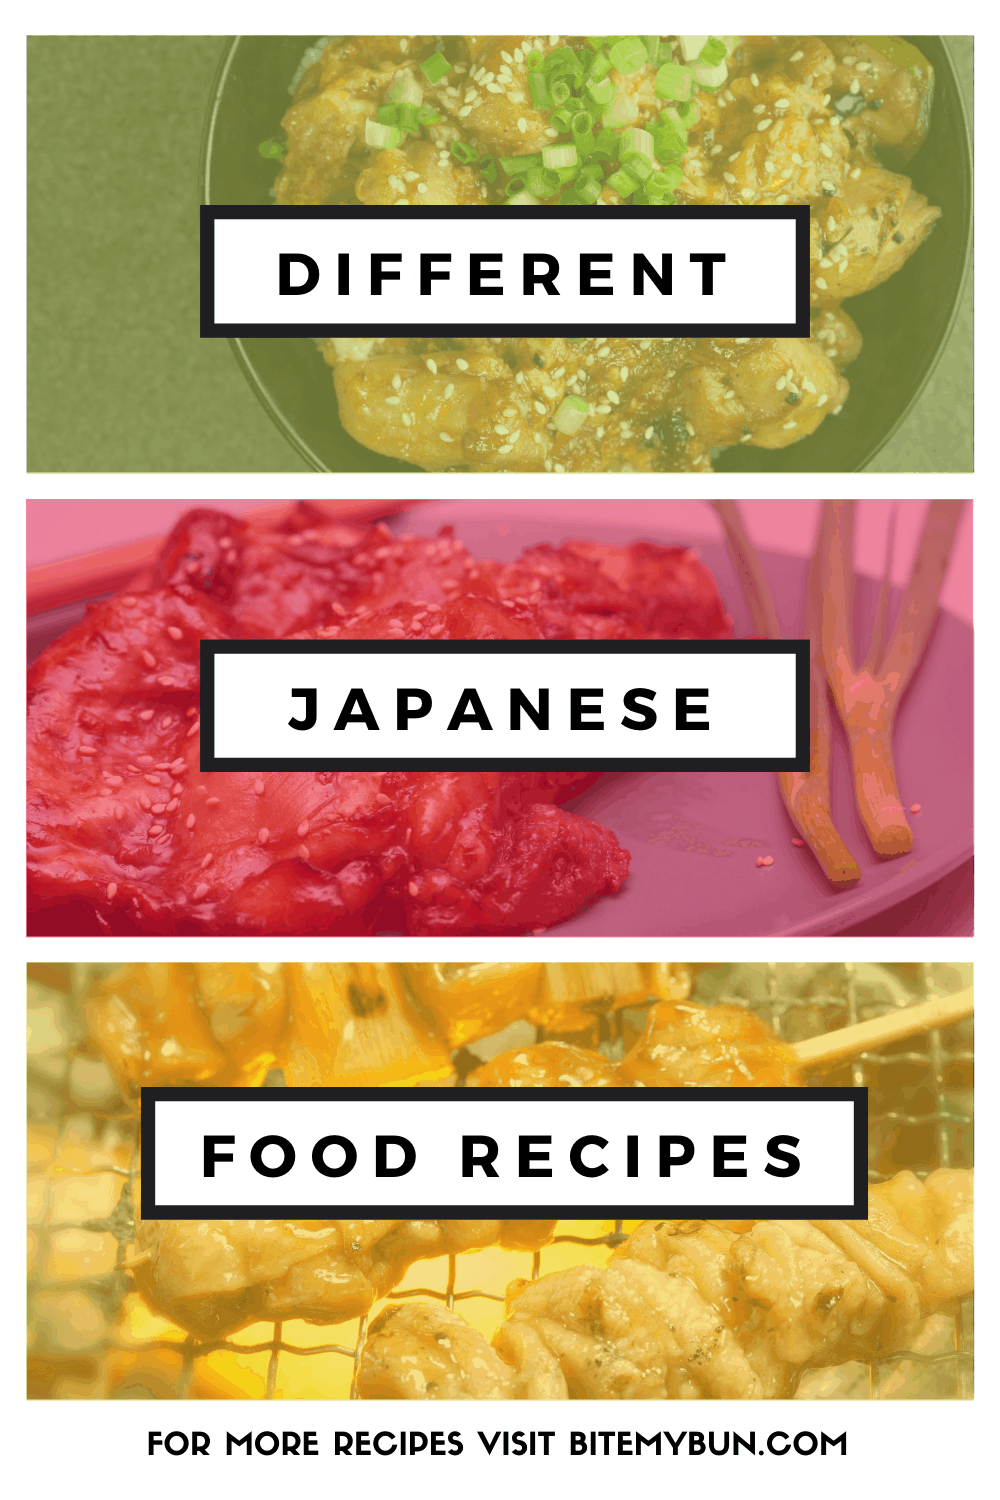 Receitas de comida japonesa